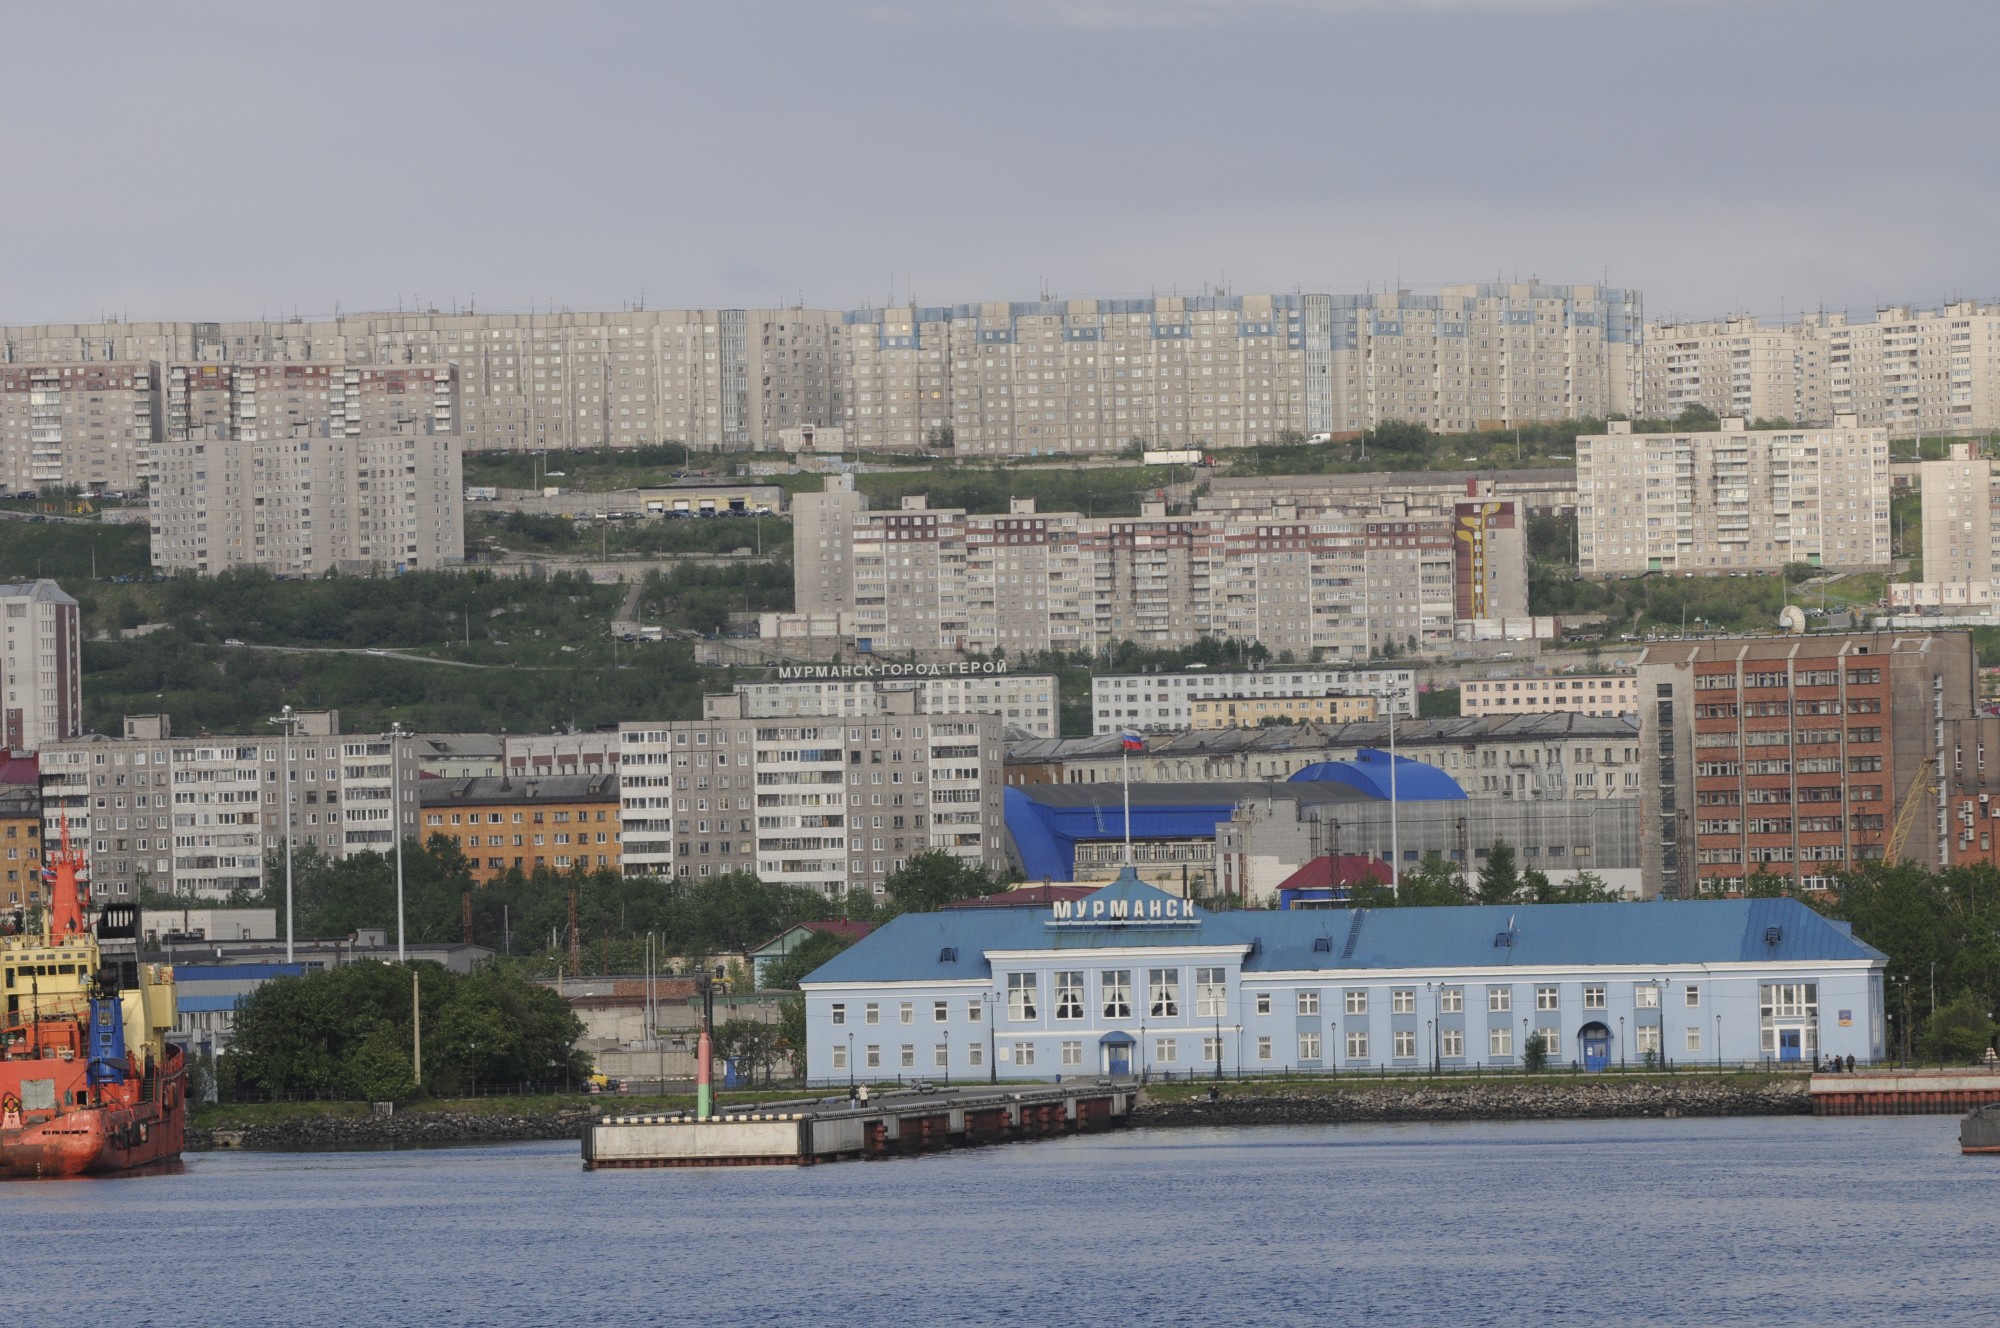 Murmansk passenger port. (Thomas Nilsen / The Independent Barents Observer)